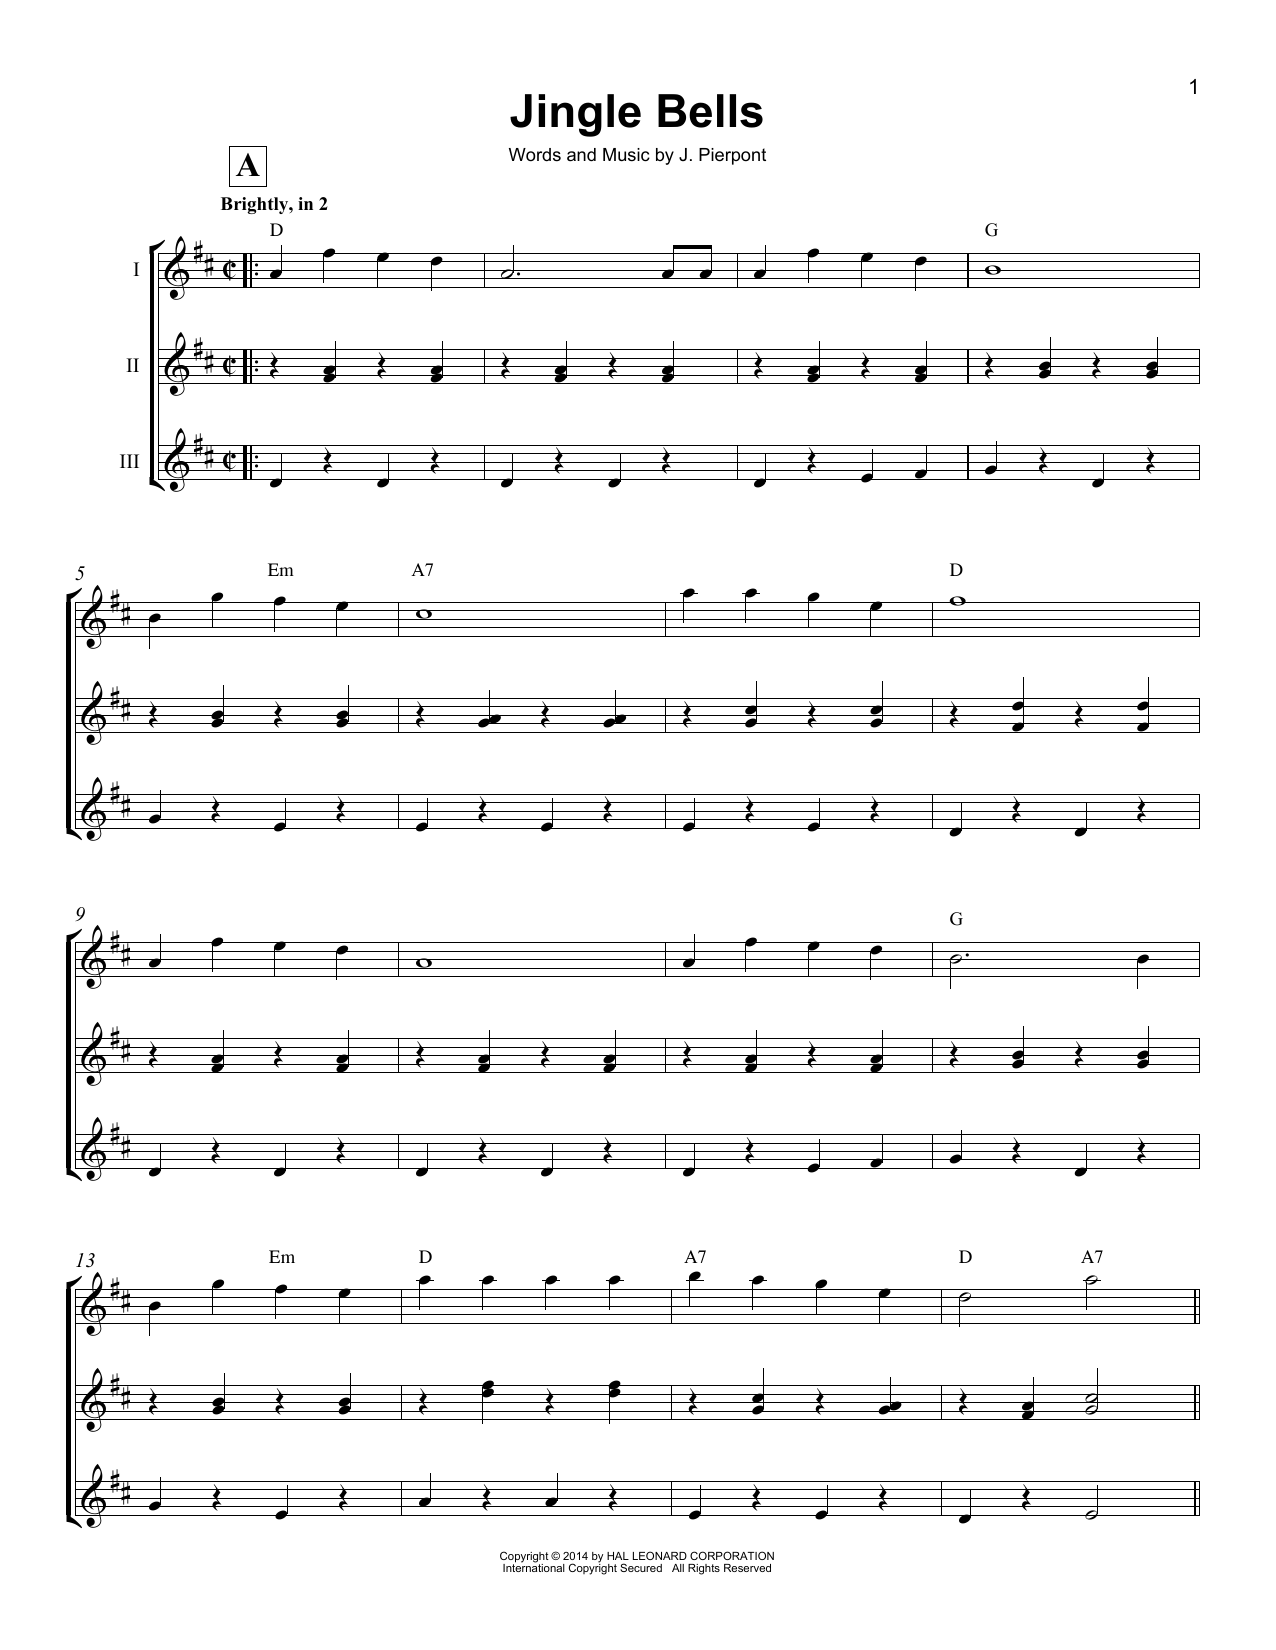 J. Pierpont Jingle Bells Sheet Music Notes & Chords for Ukulele Ensemble - Download or Print PDF